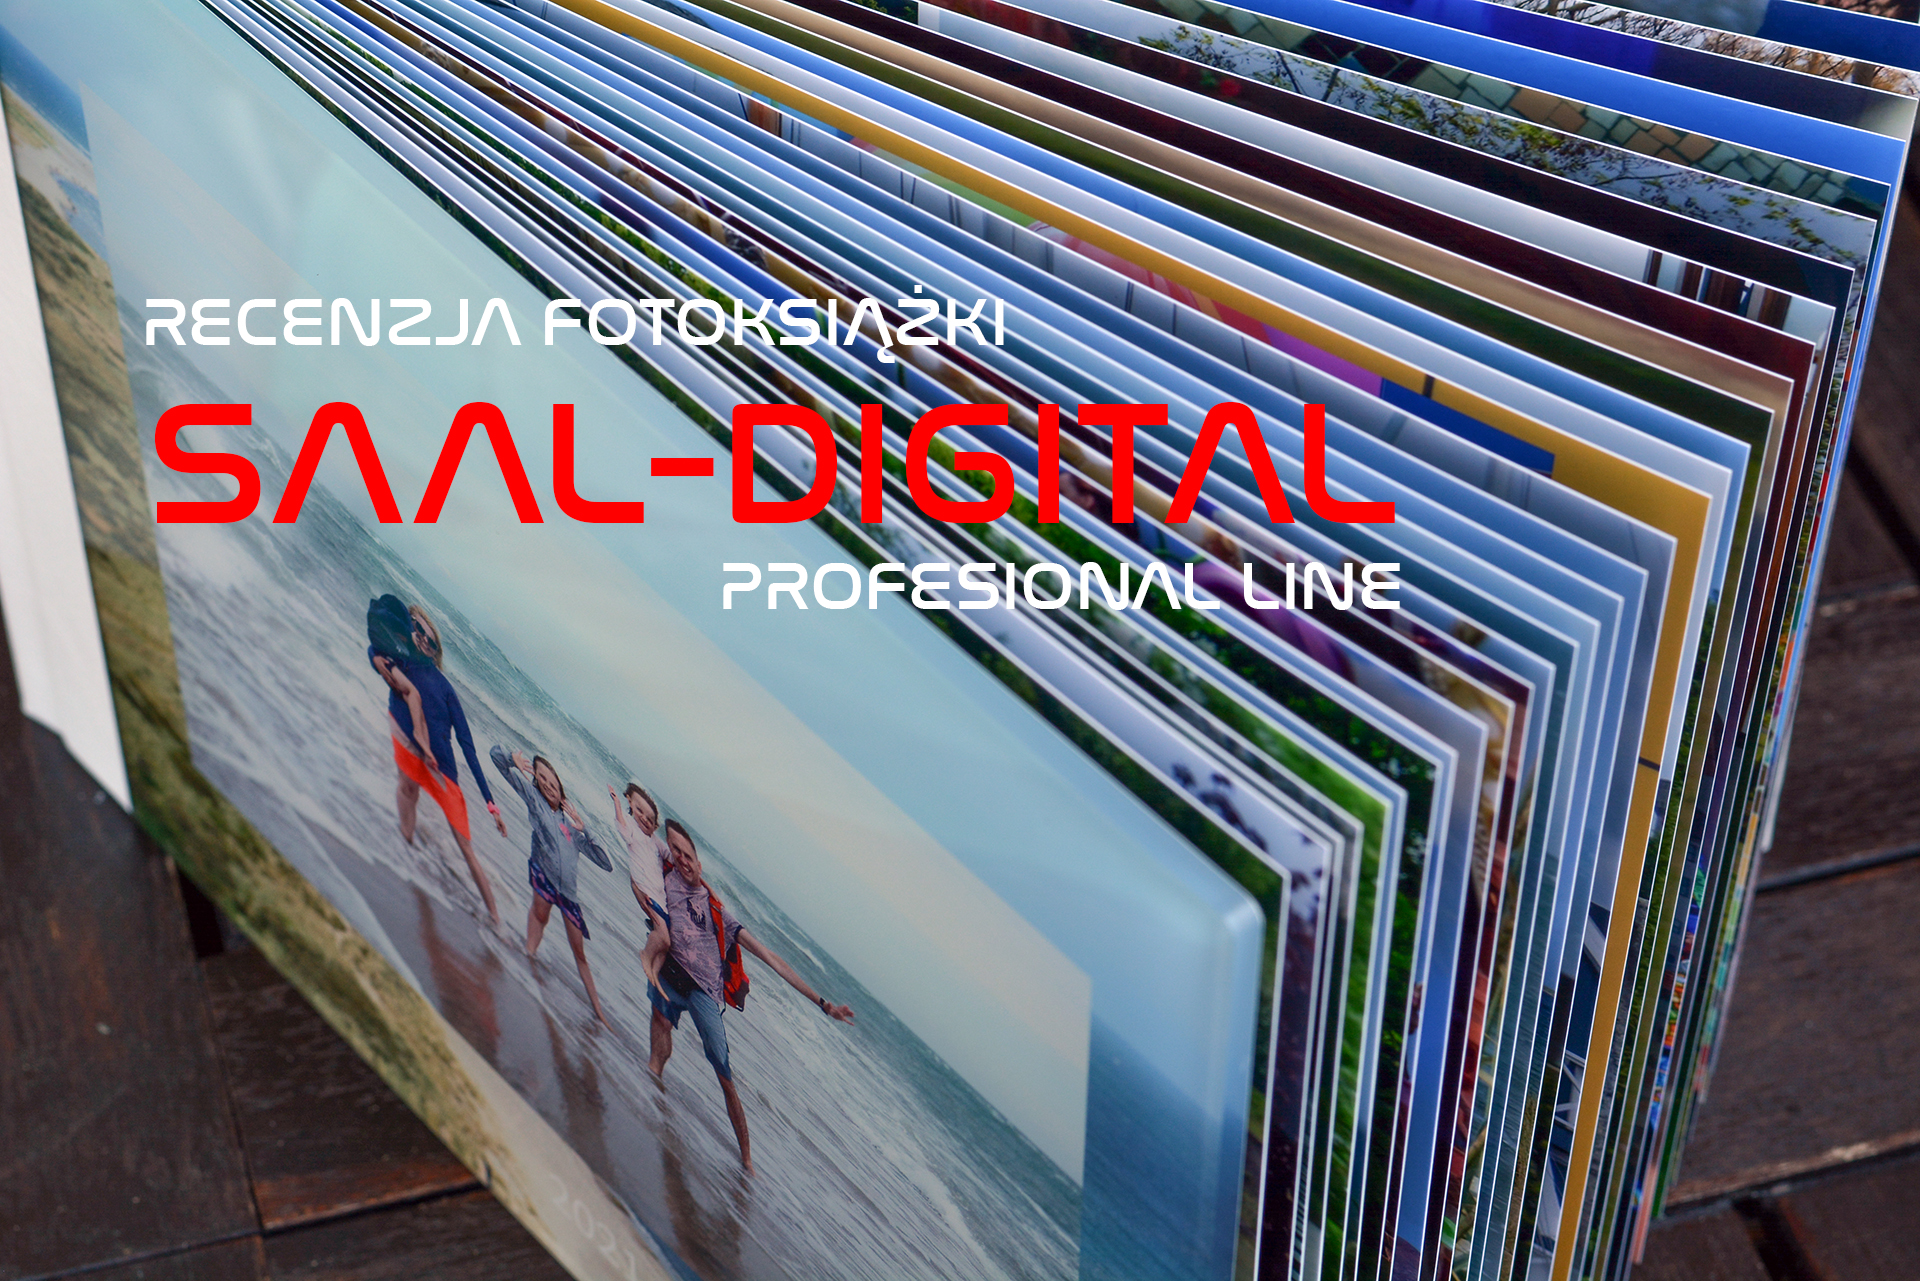 Recenzja fotoksiążki Saal Digital Profesional Line